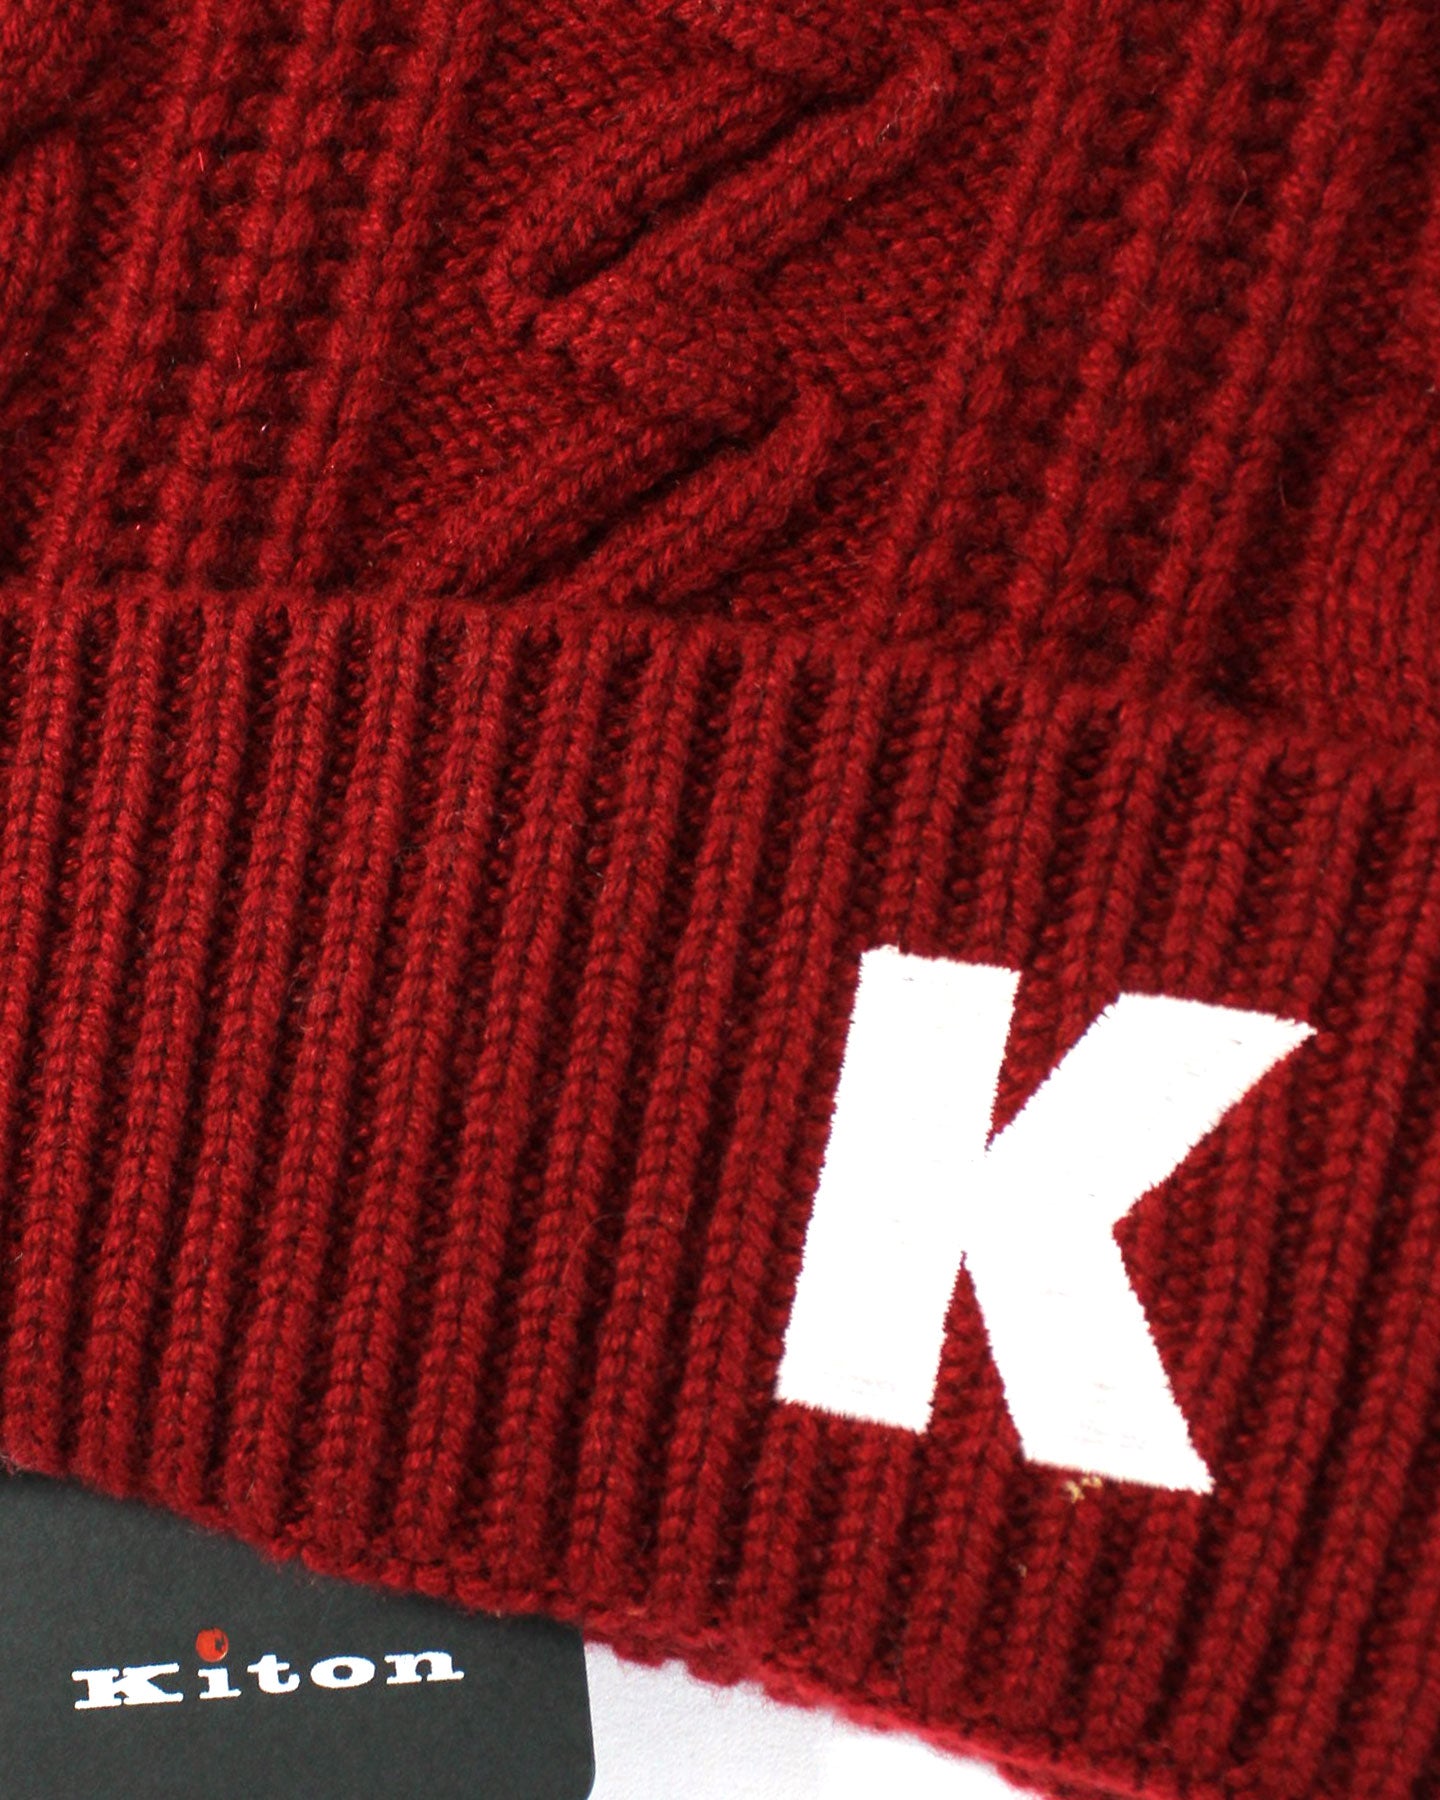 Kiton Soft Knit Cap Cashmere Burgundy Red